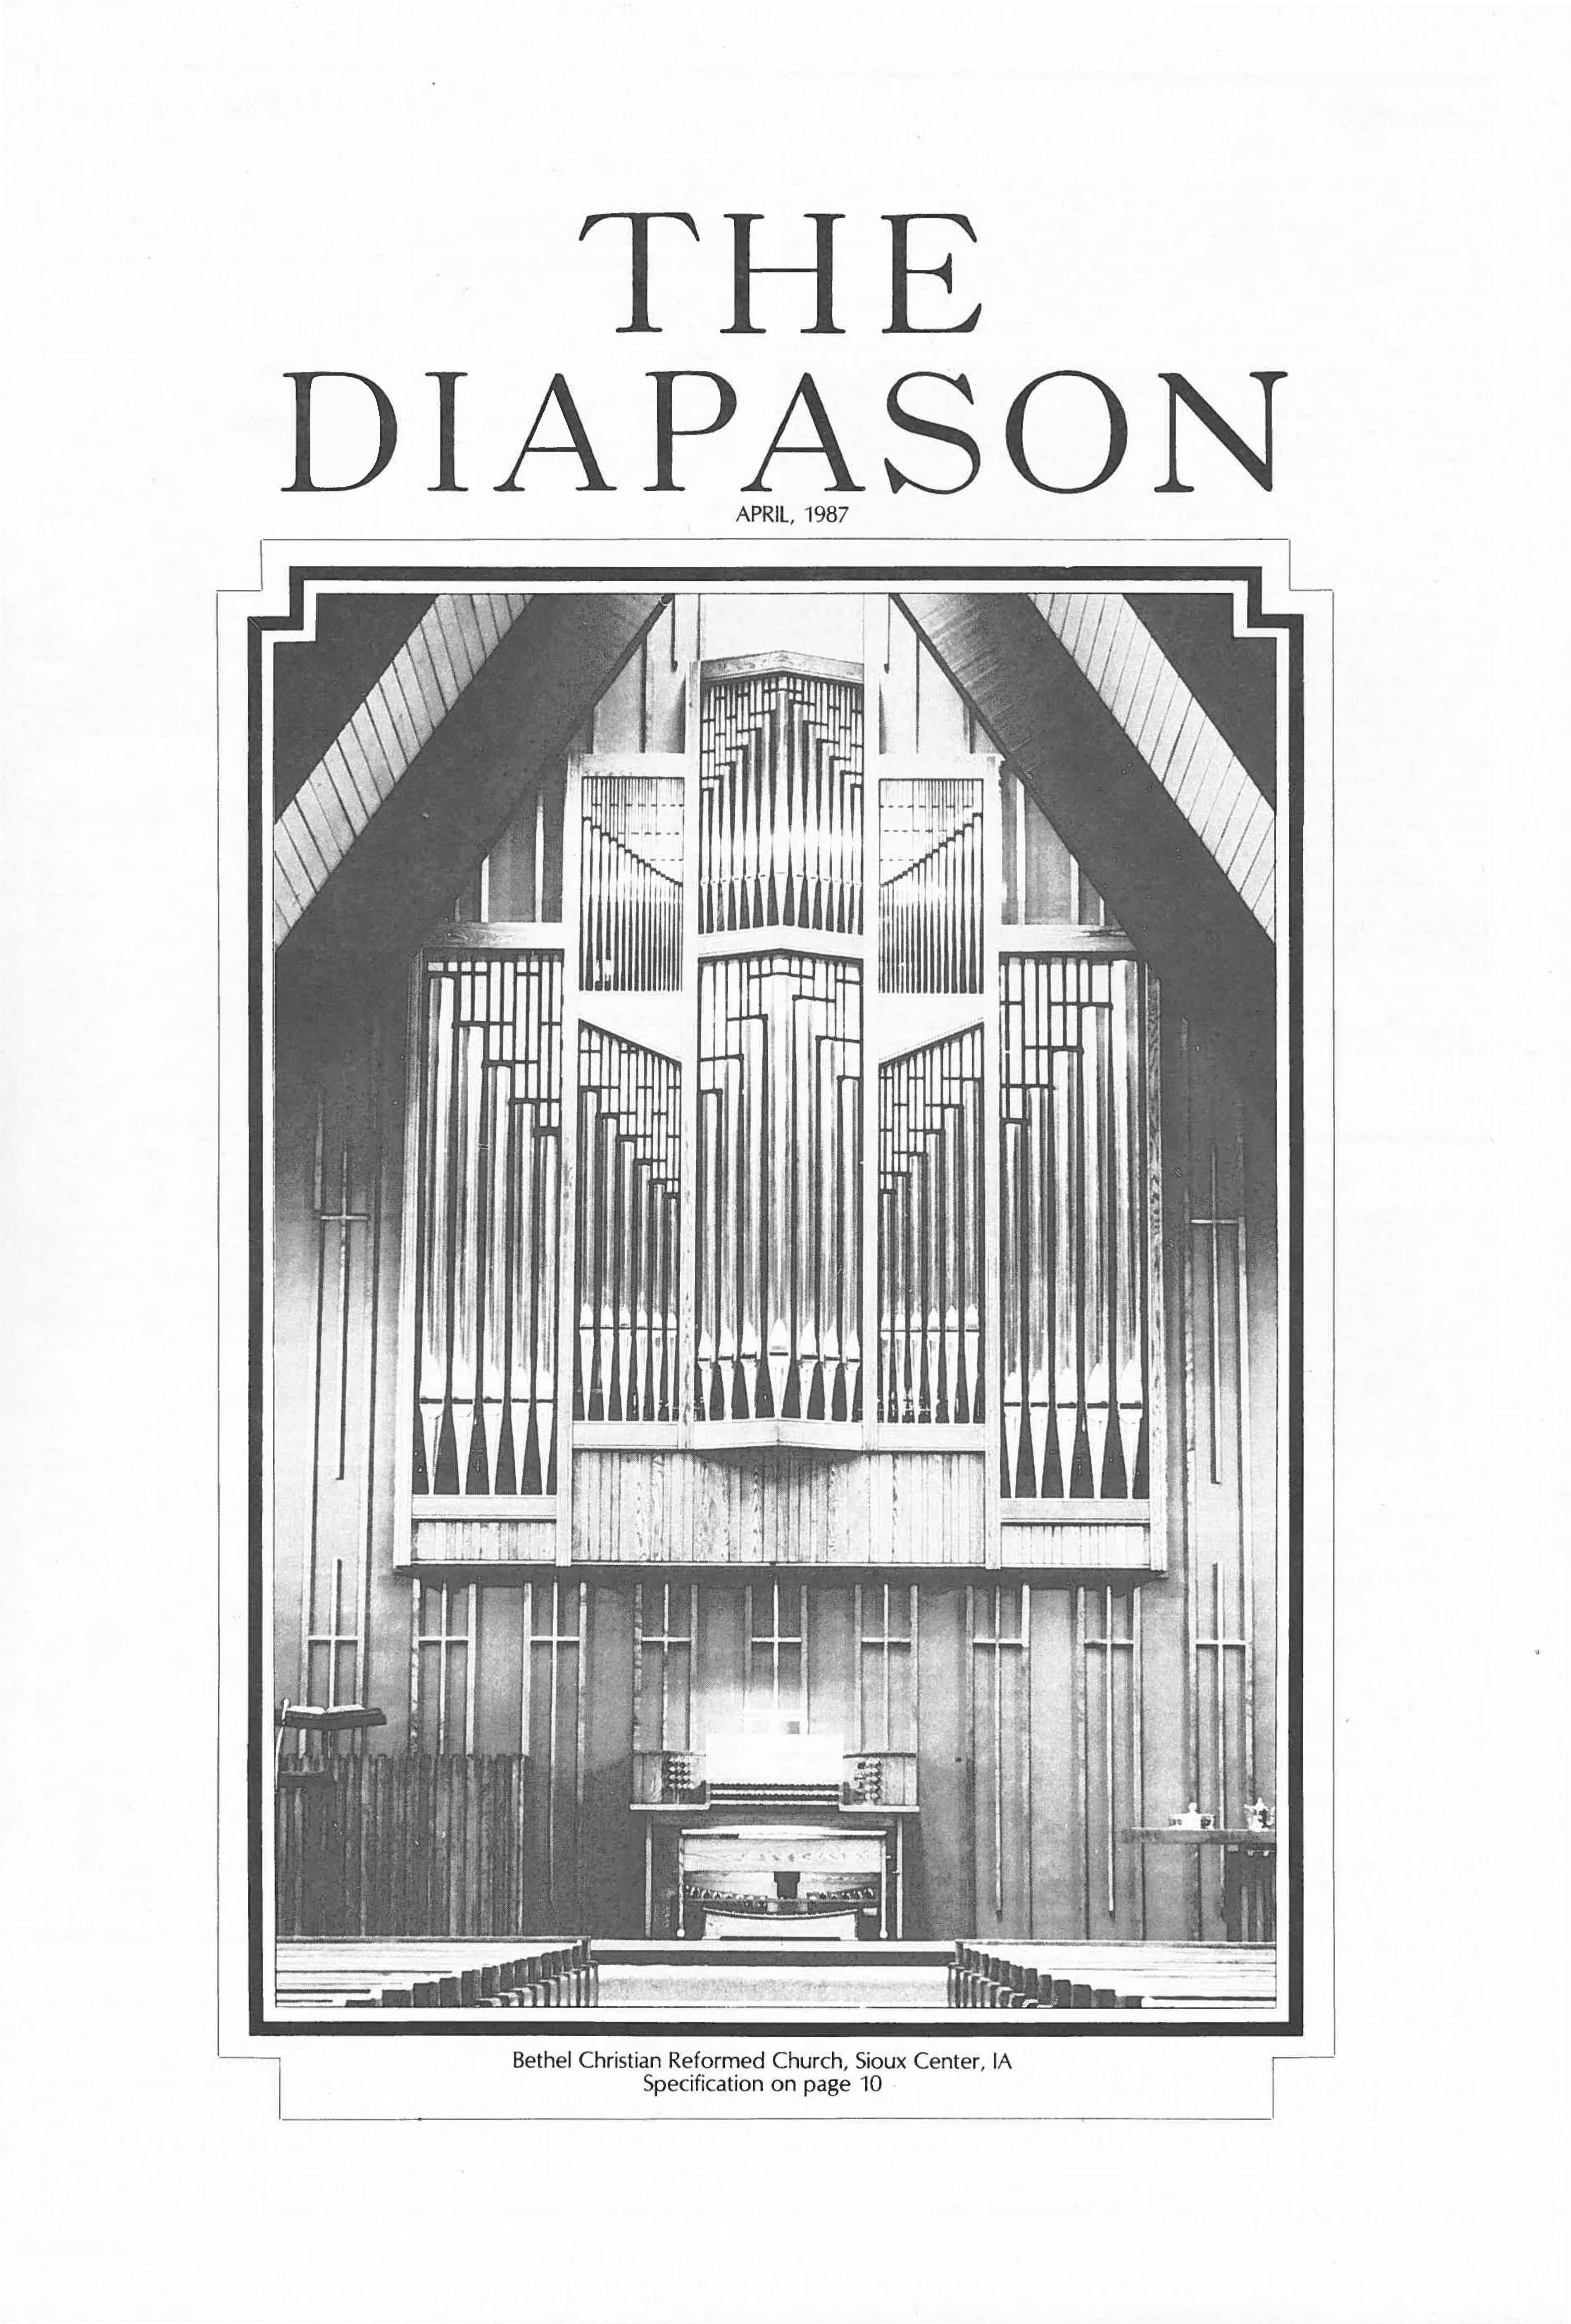 April 1987 Full Issue PDF